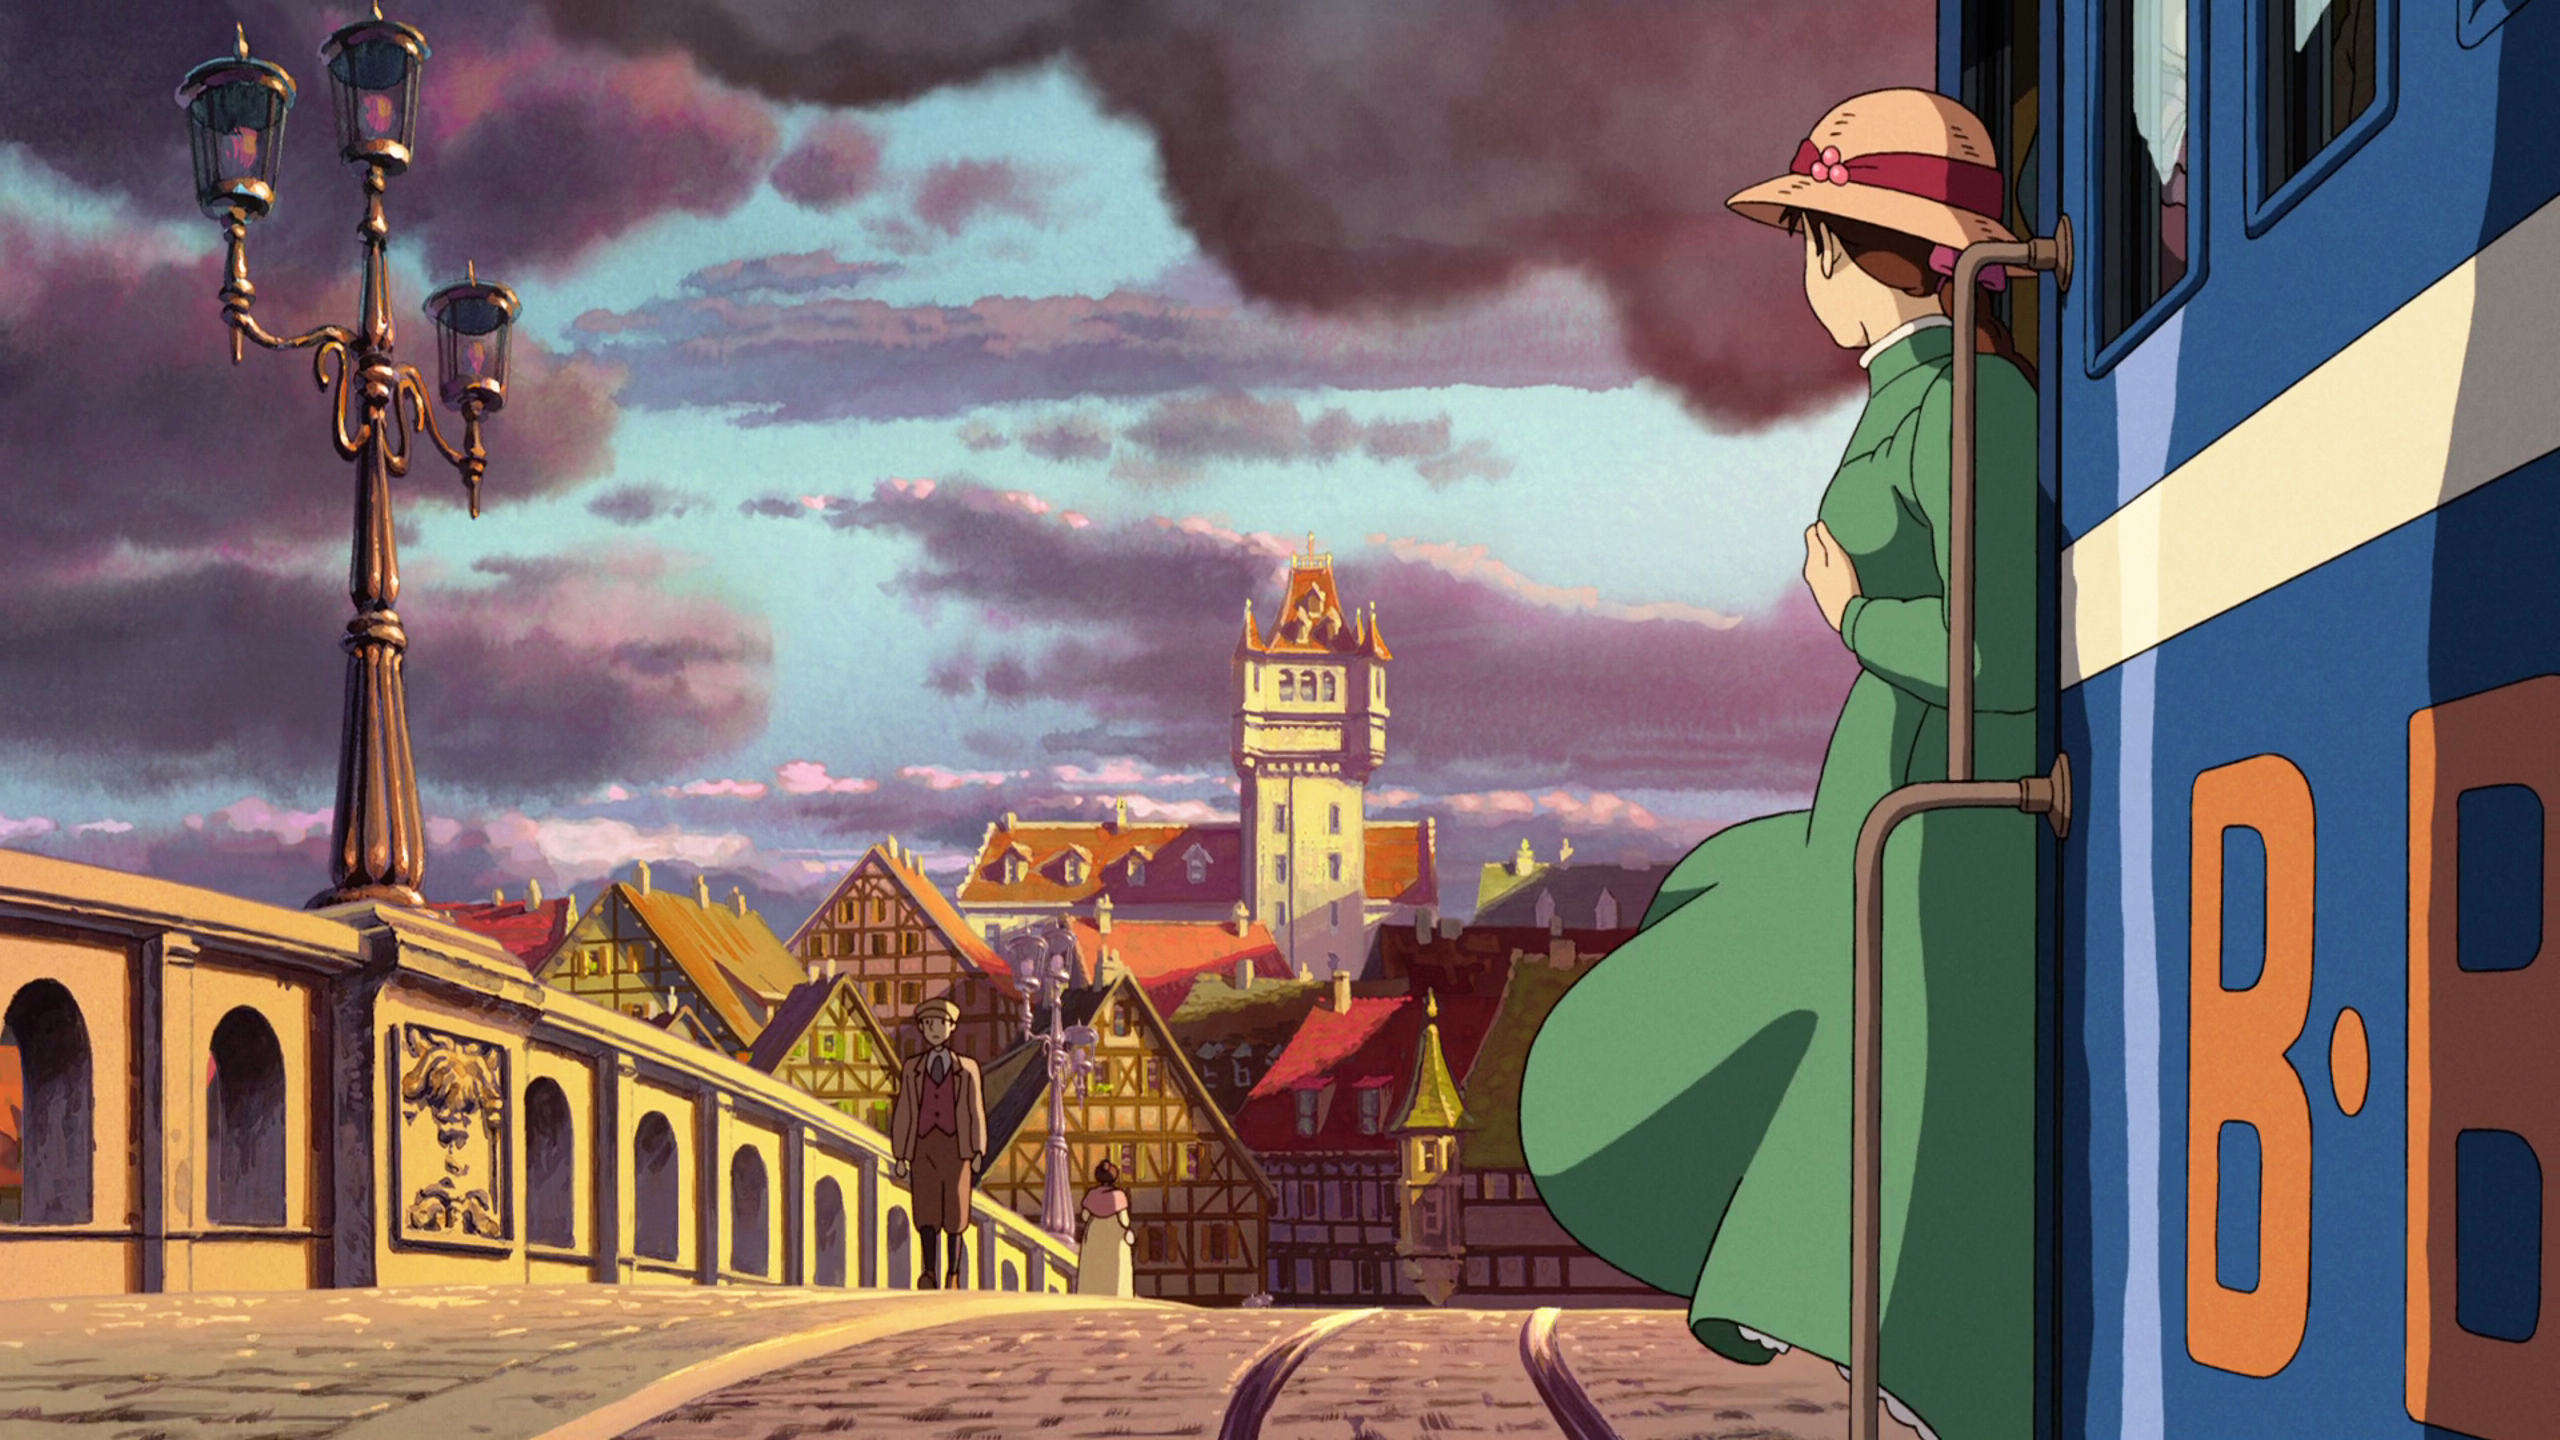 2560x1440 Studio Ghibli Backgrounds Album on Imgur | Studio ghibli background, Howls moving castle, Howls moving castle wallpaper